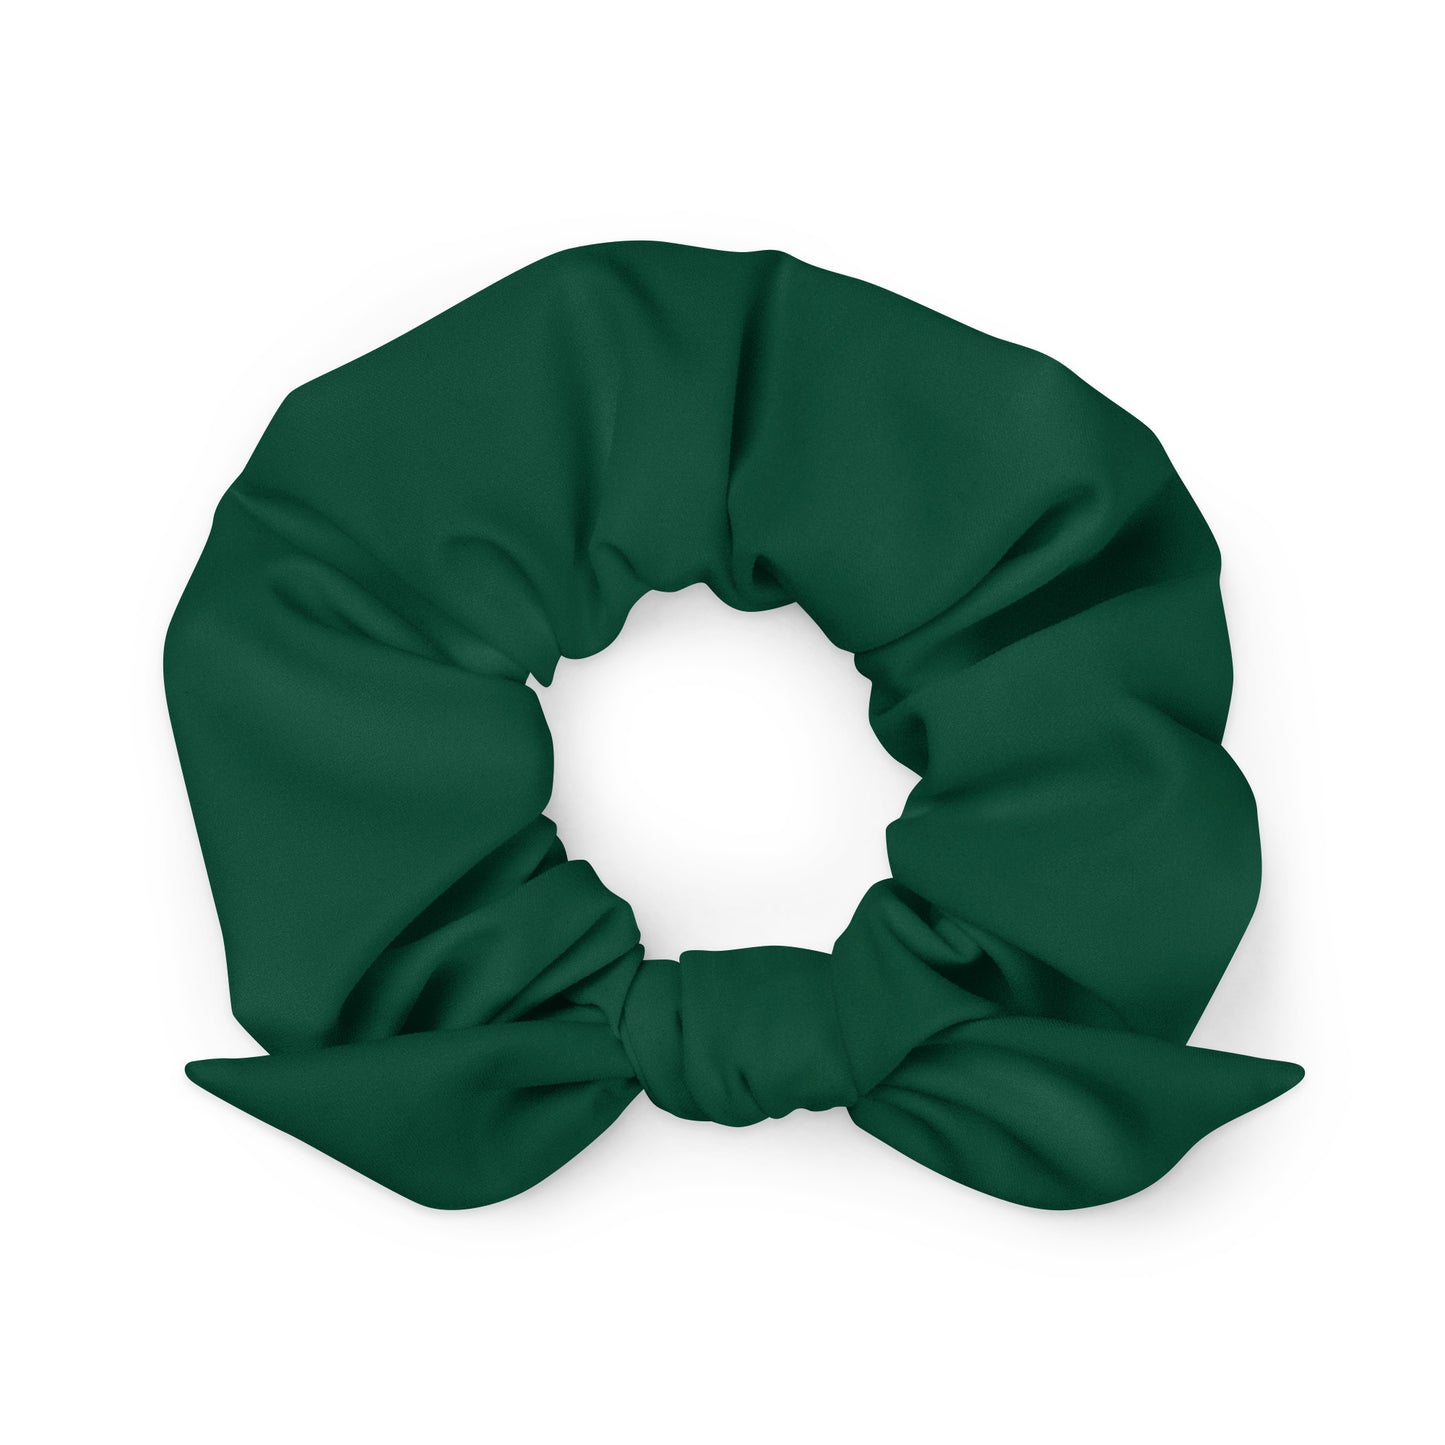 Hair Scrunchies For Women (Scrunchie British Racing Green Colour)